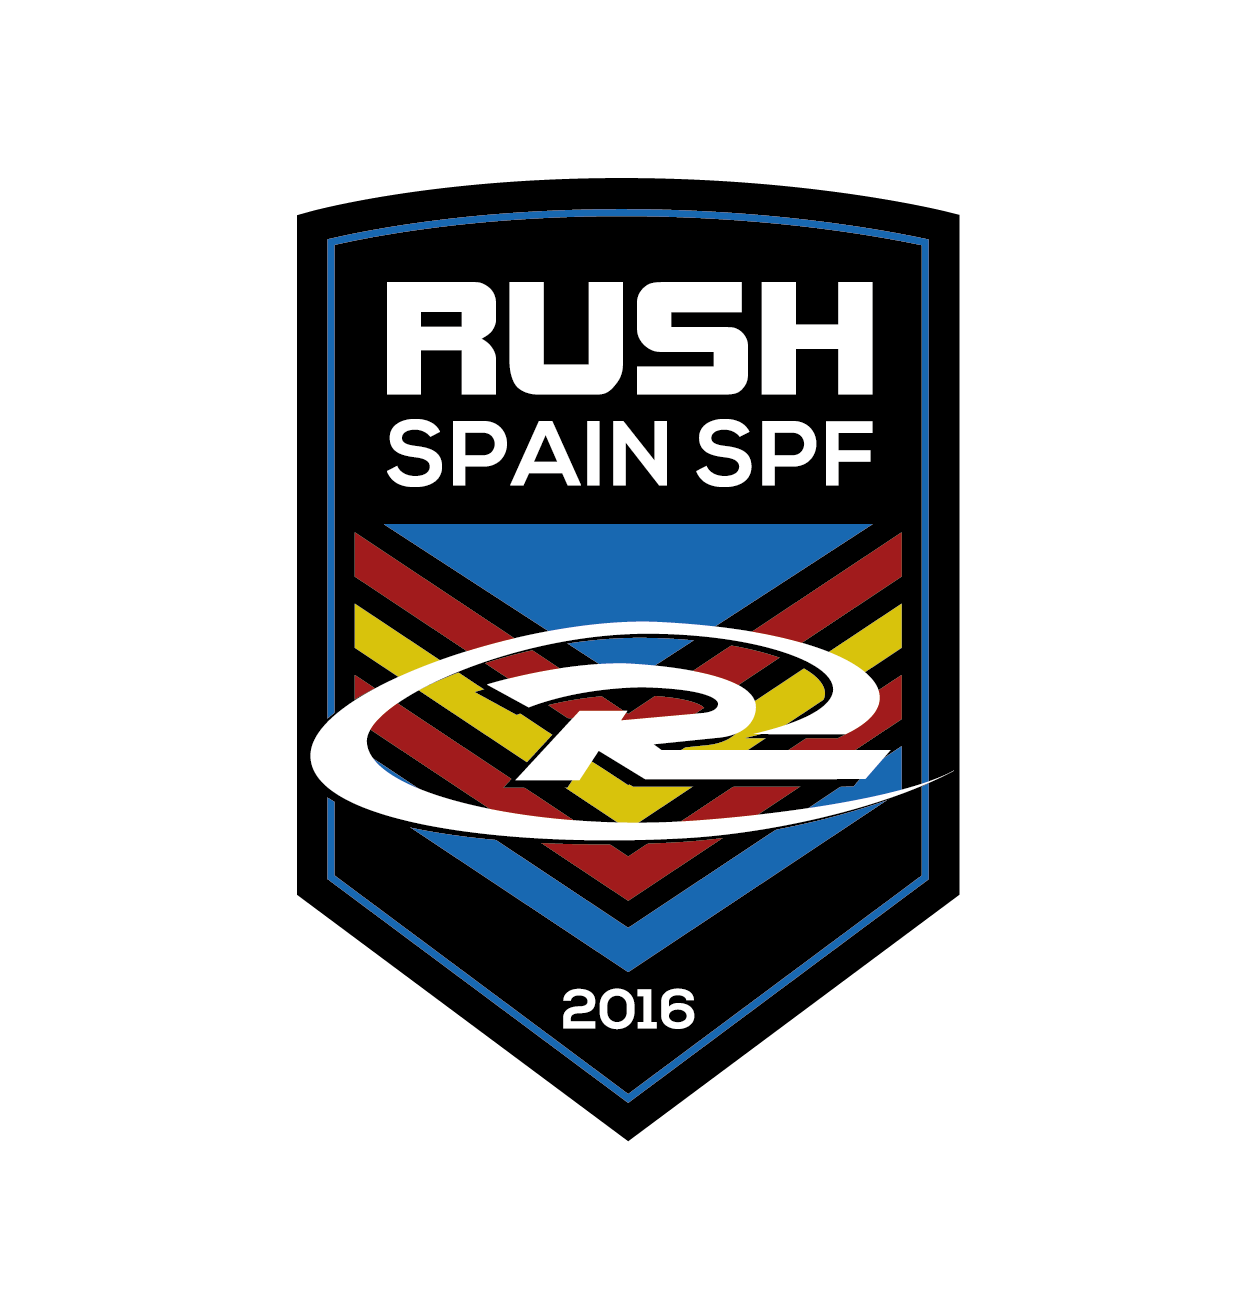 Rush Spain SPF 02